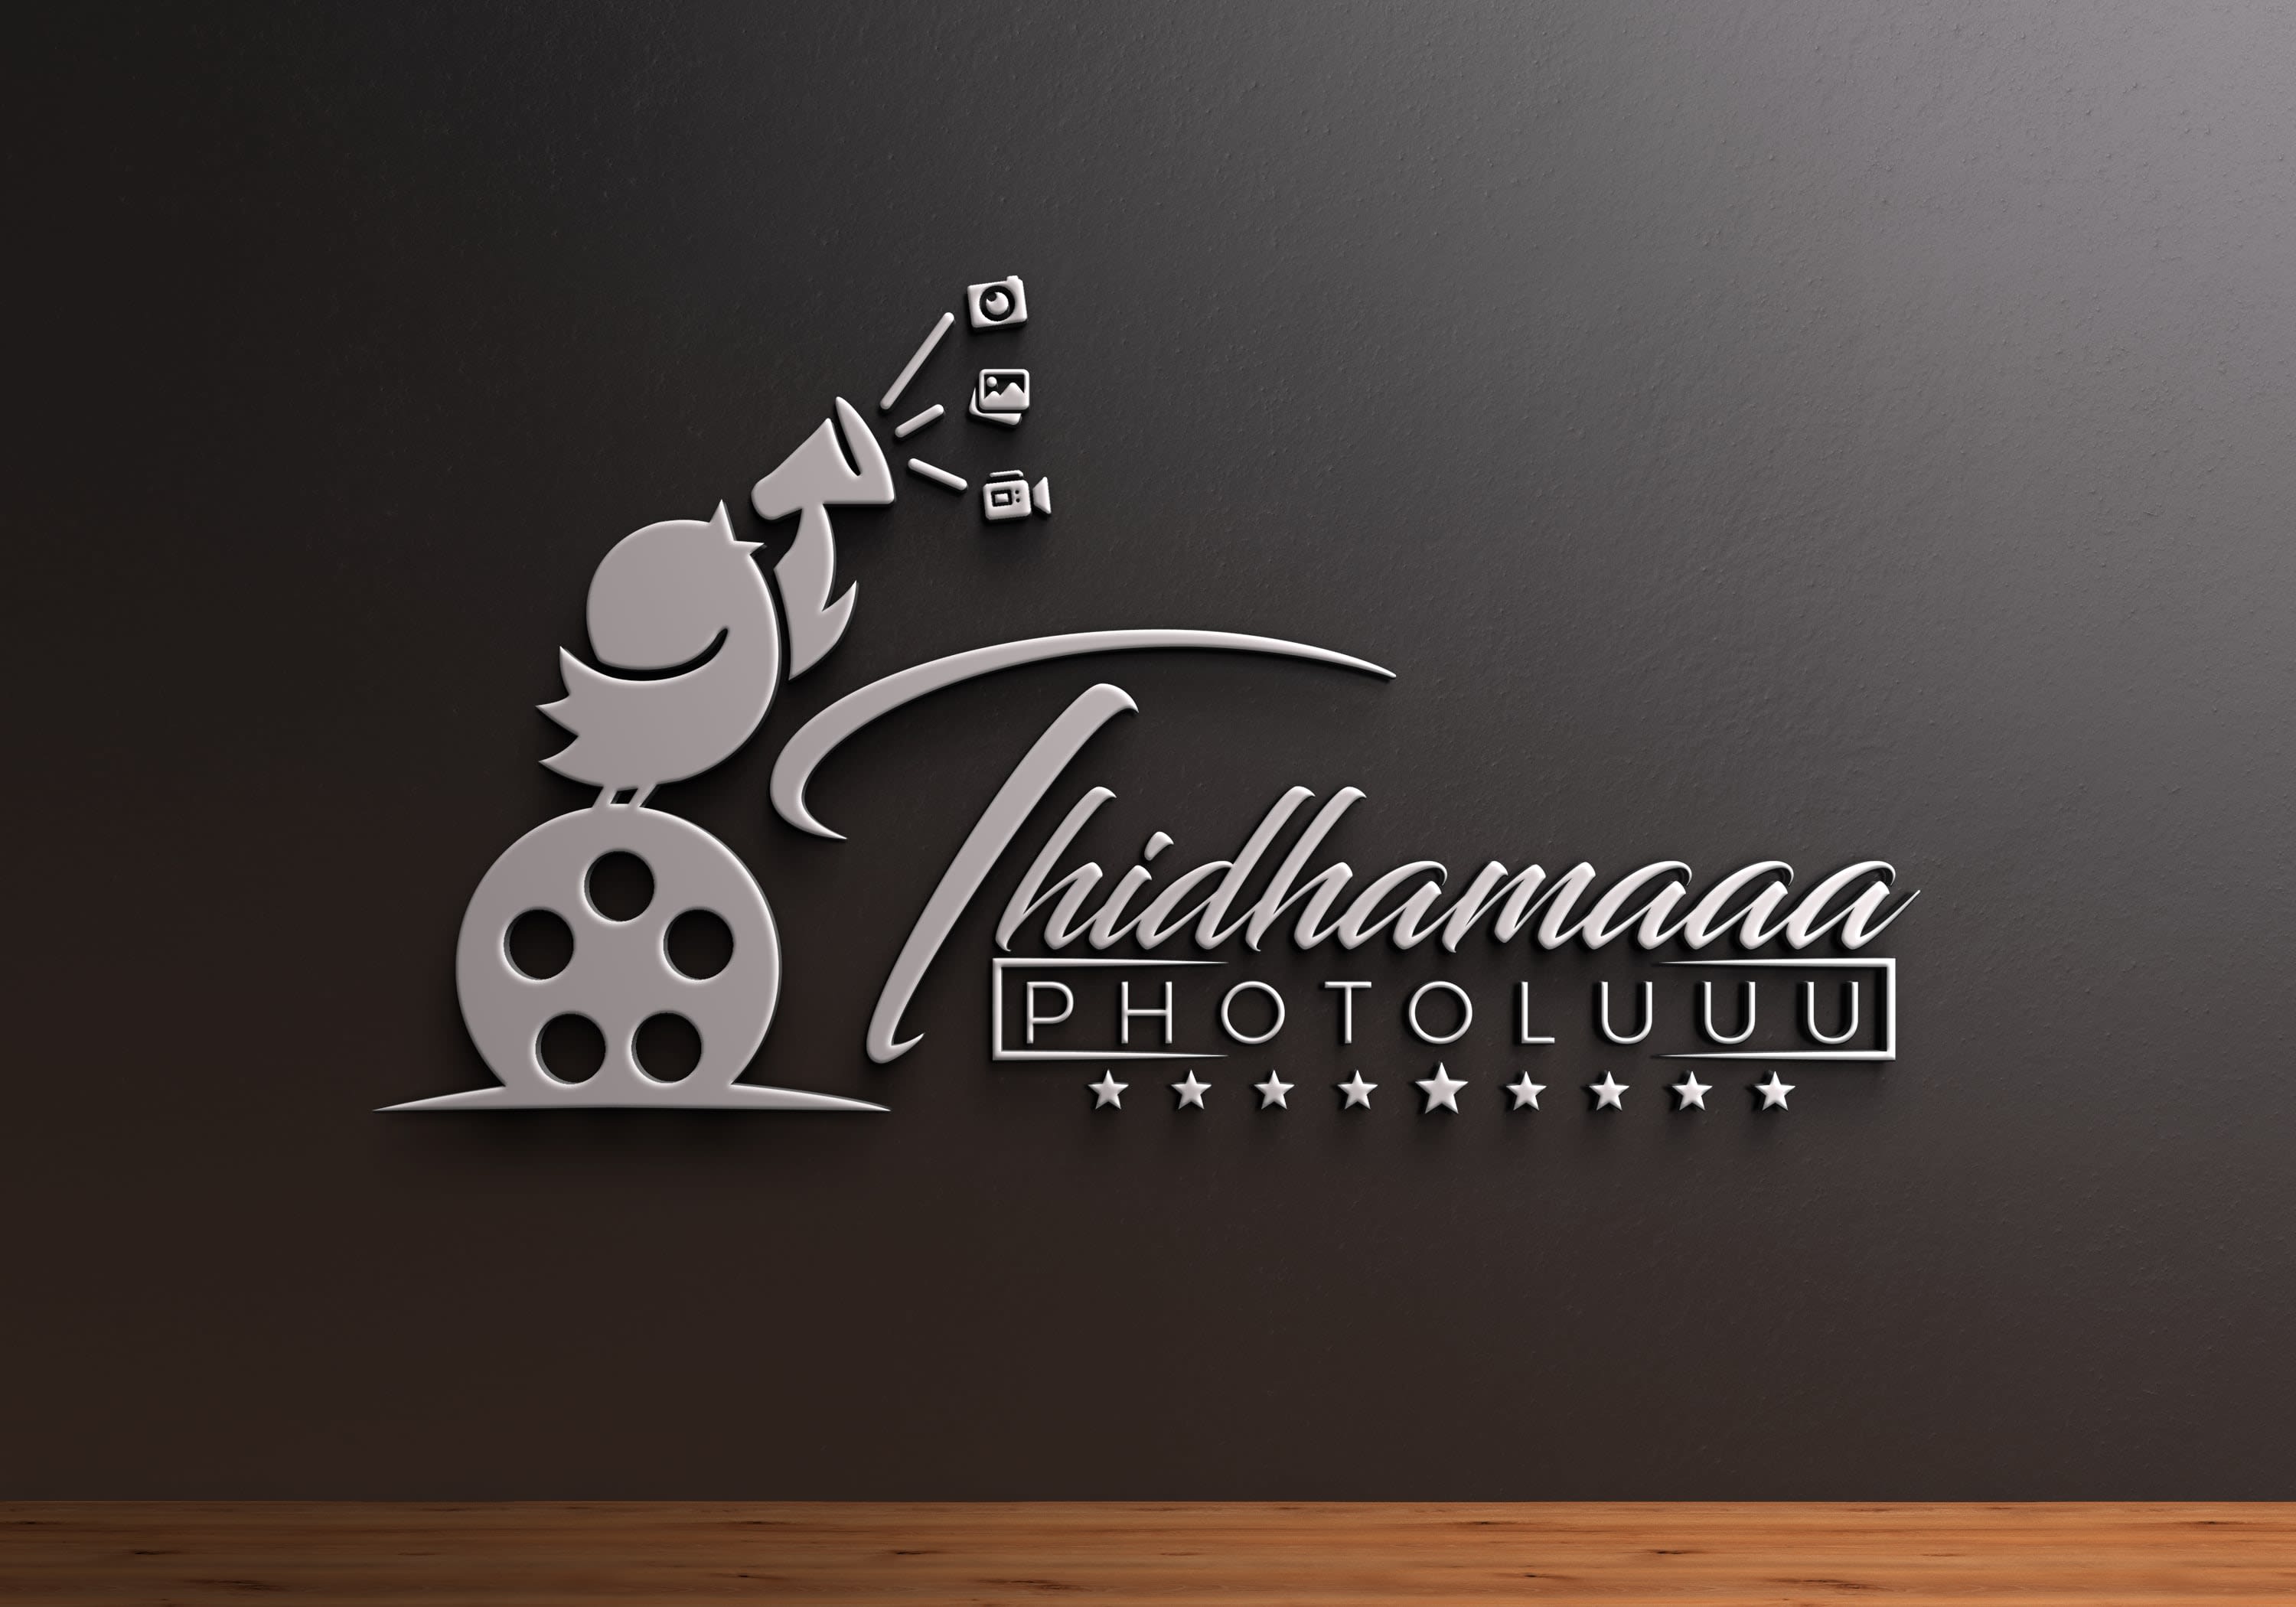 Thidhamaaa Photoluuu                                                                                                                                                  STUDIO1818